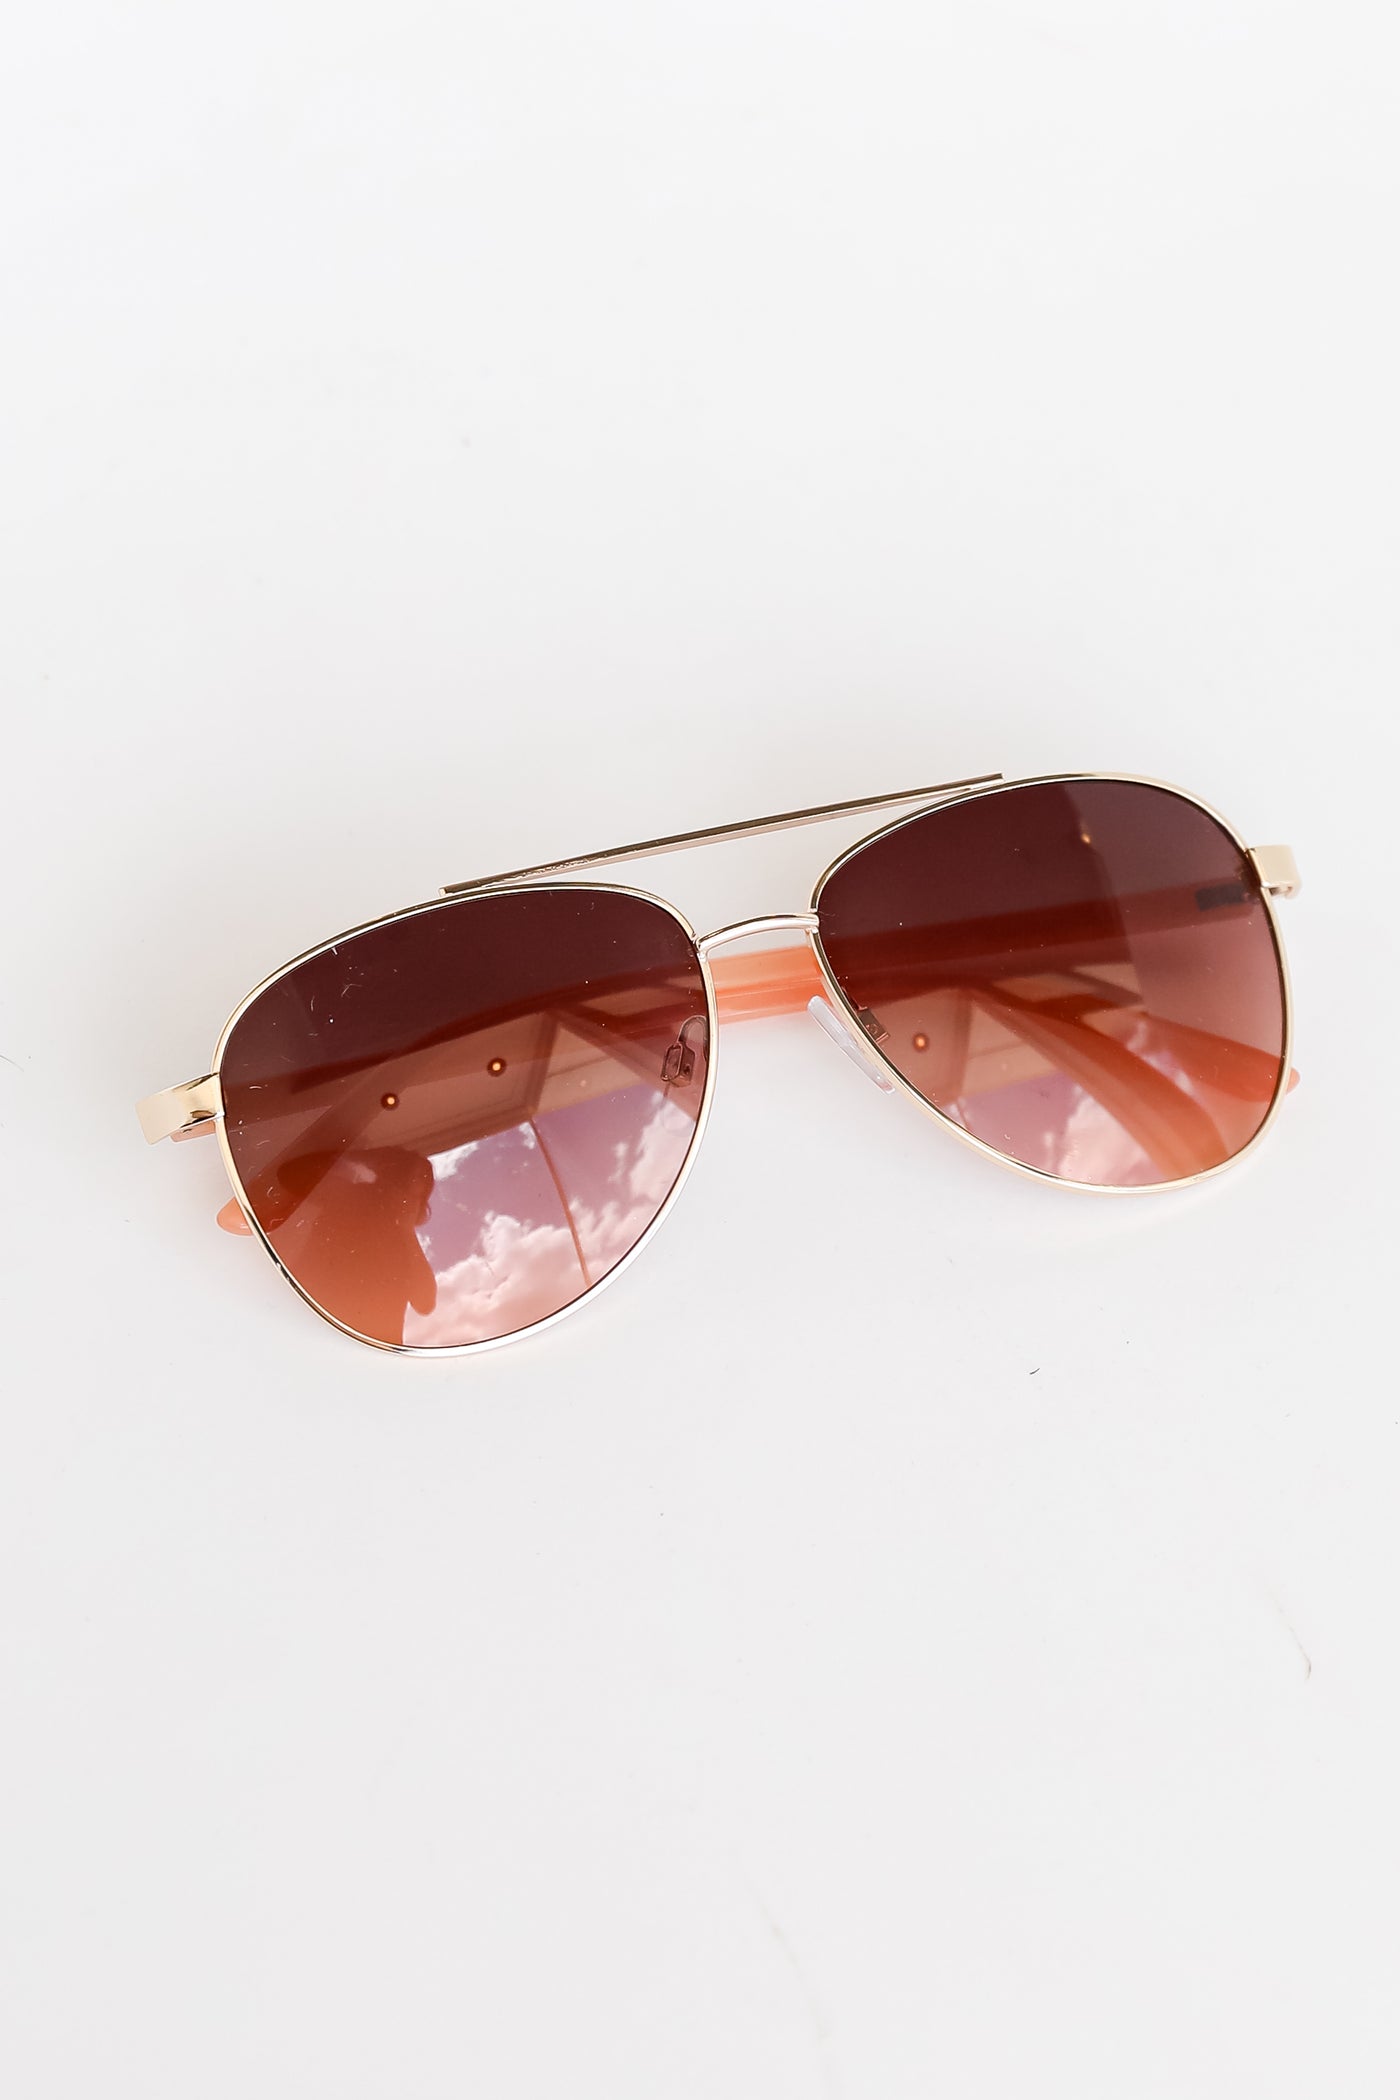 gold Aviator Sunglasses flat lay